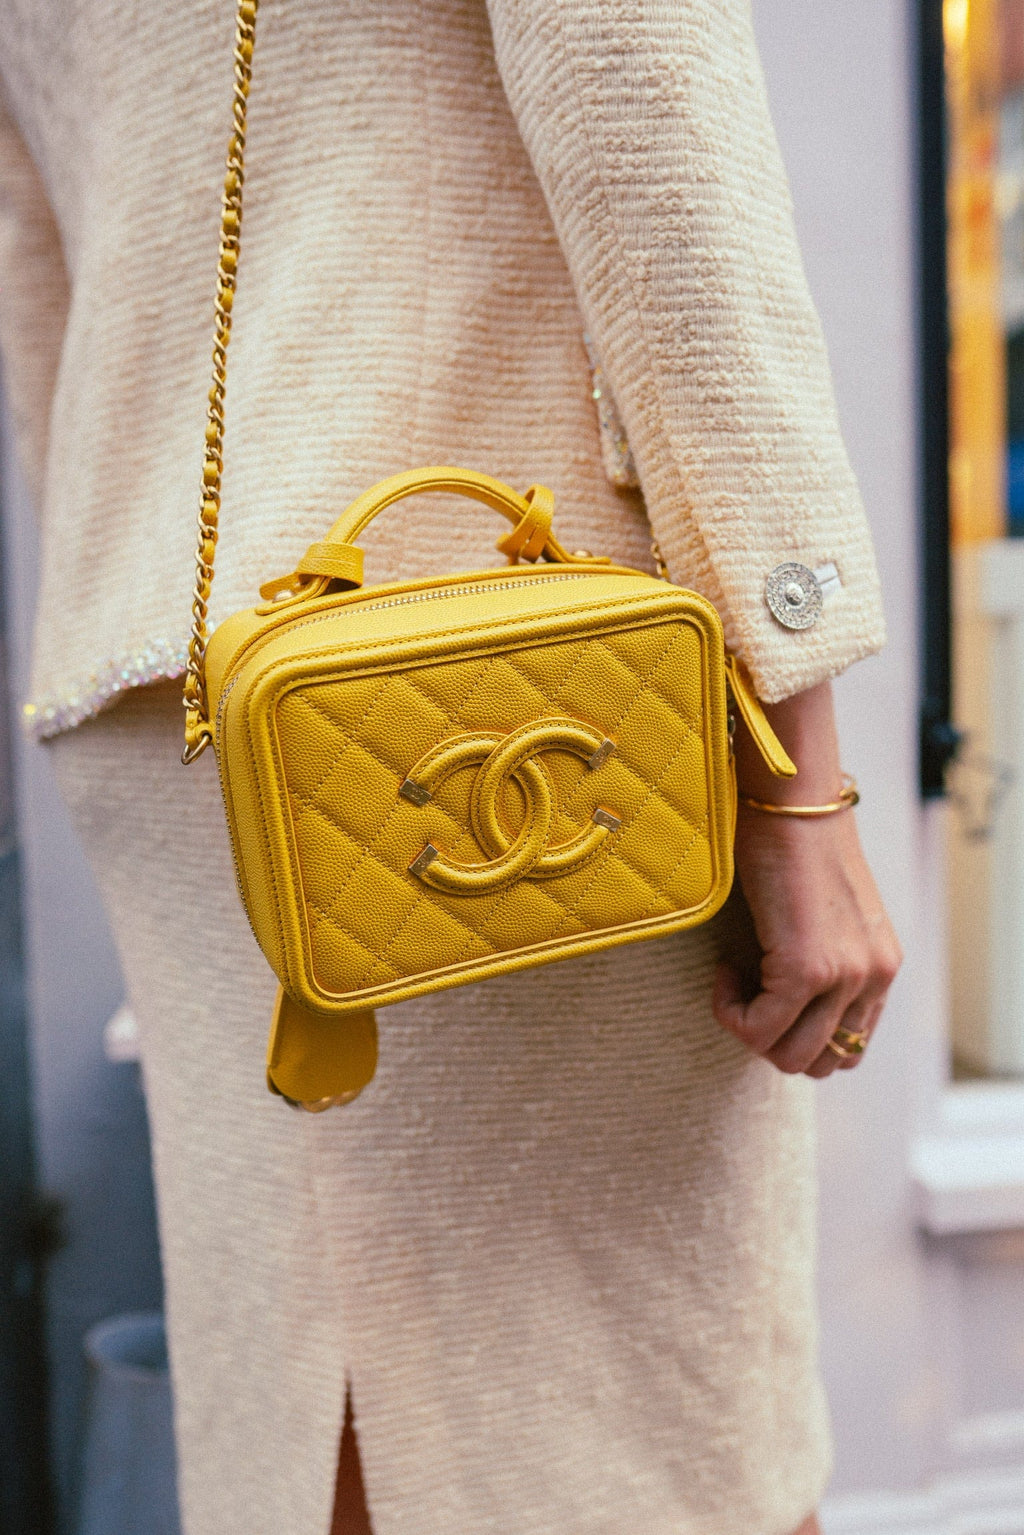 Chanel Small Vanity Bag Grey